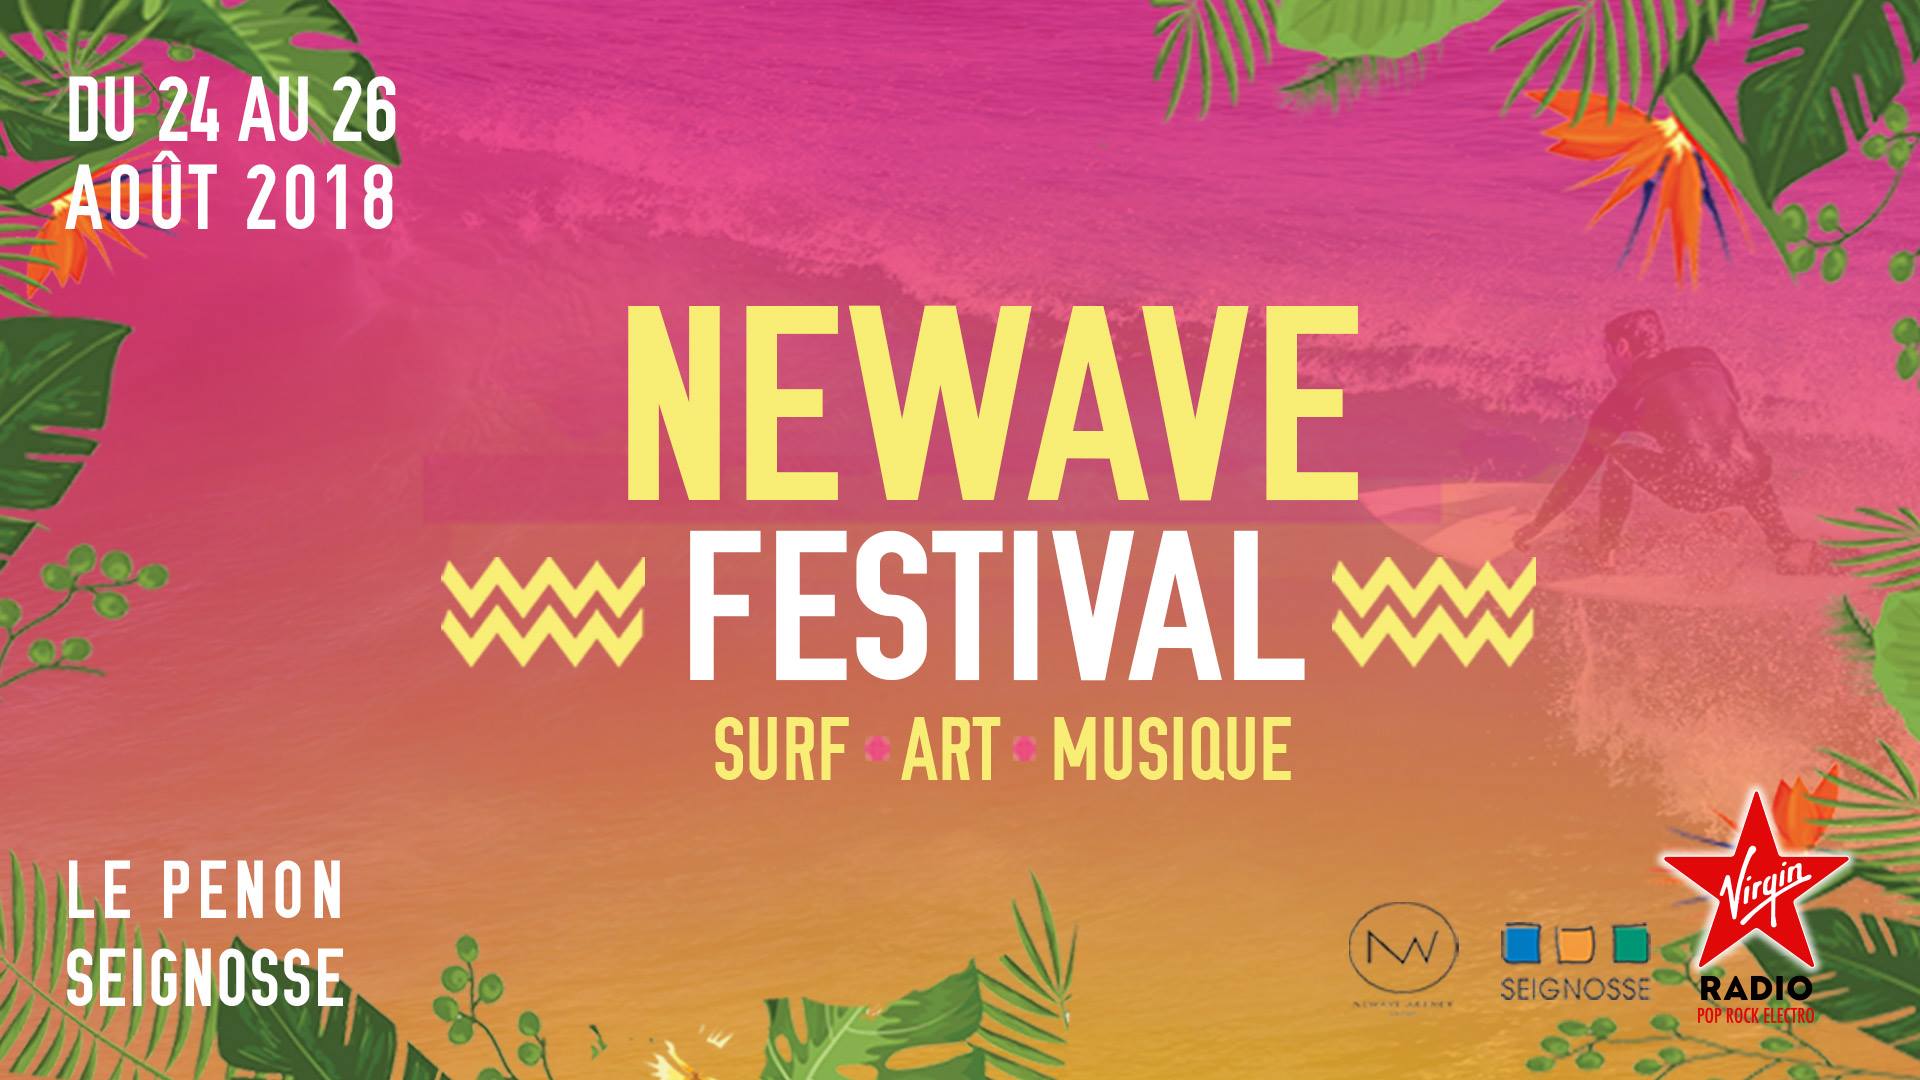 Newave Festival